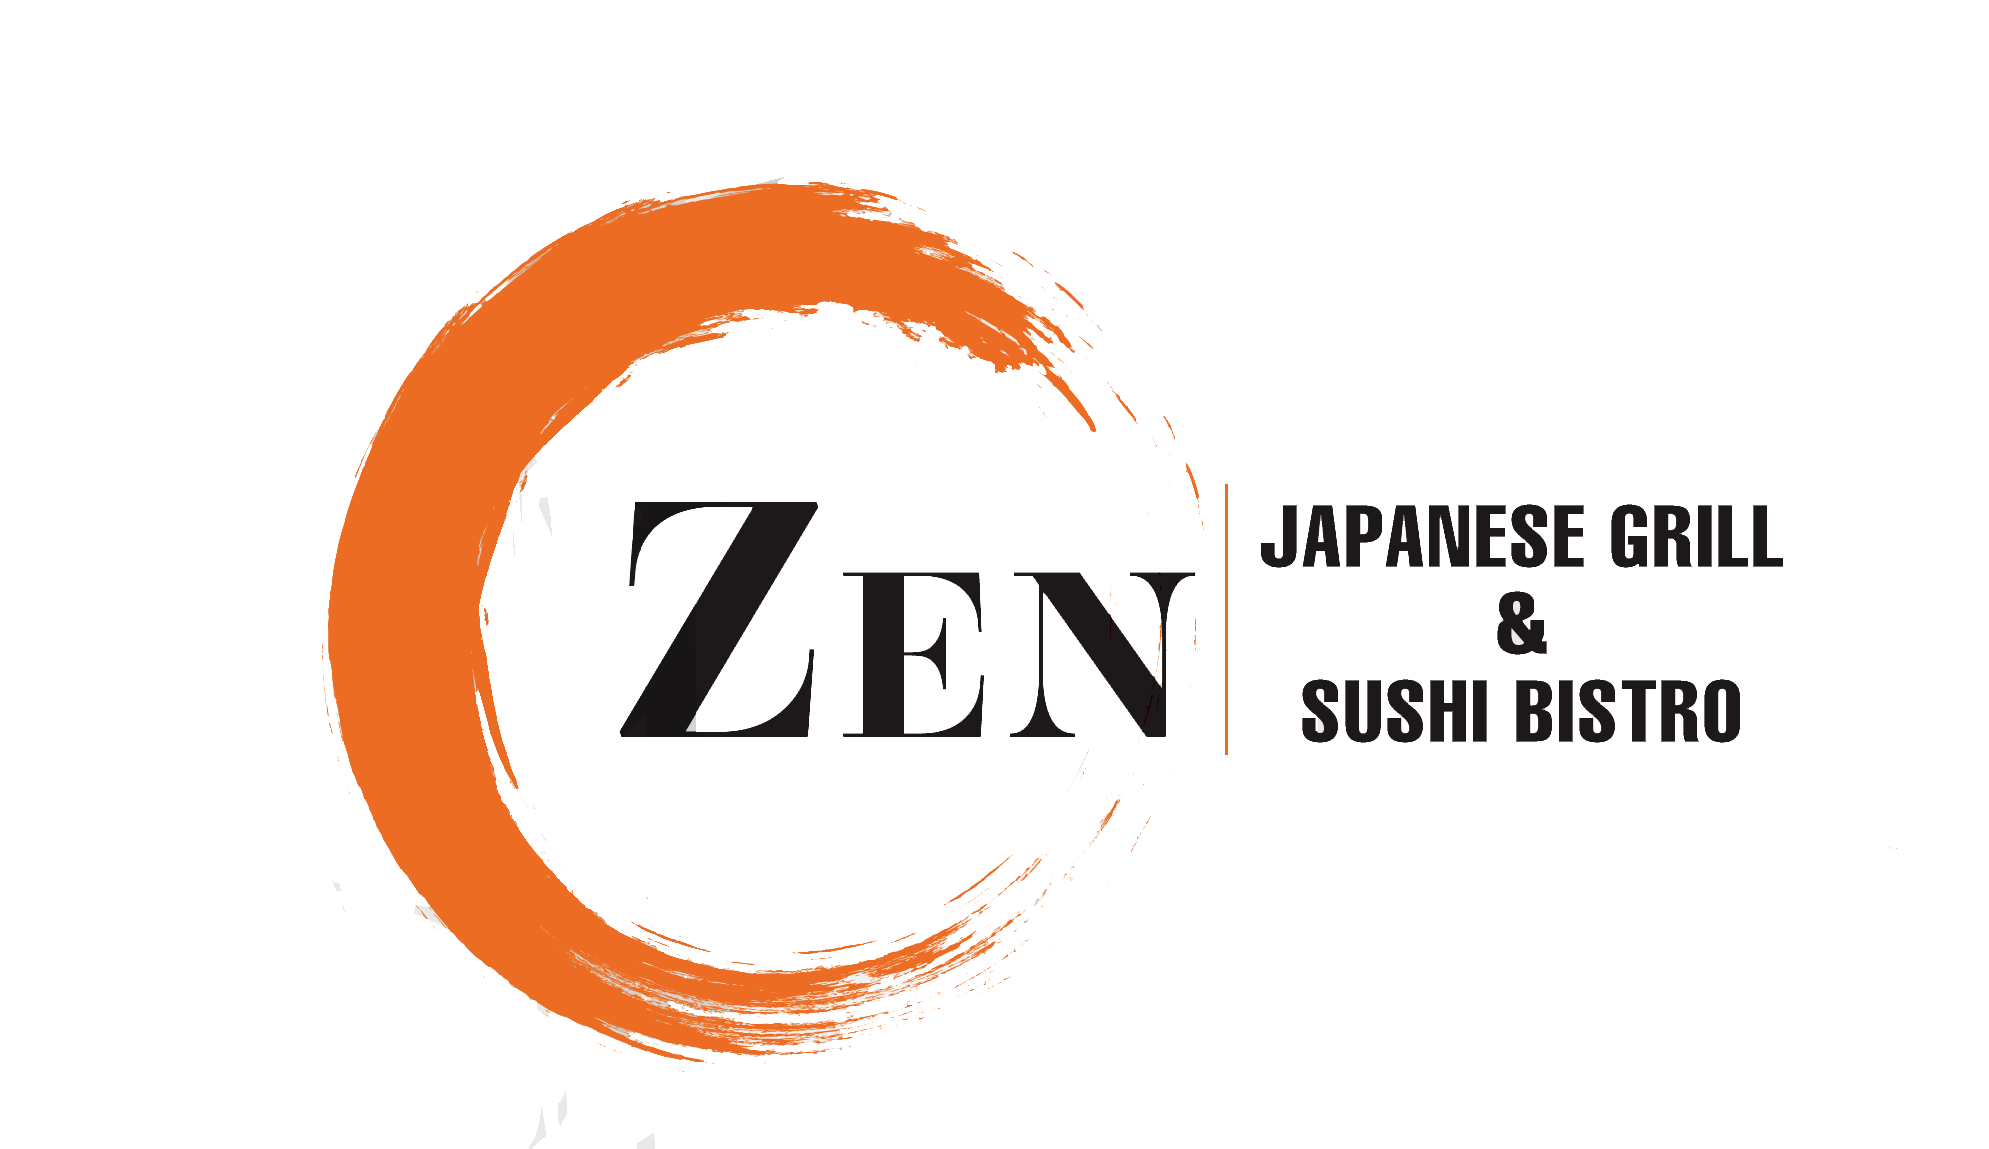 Zen Japanese sushi bistro marketing solutions logo